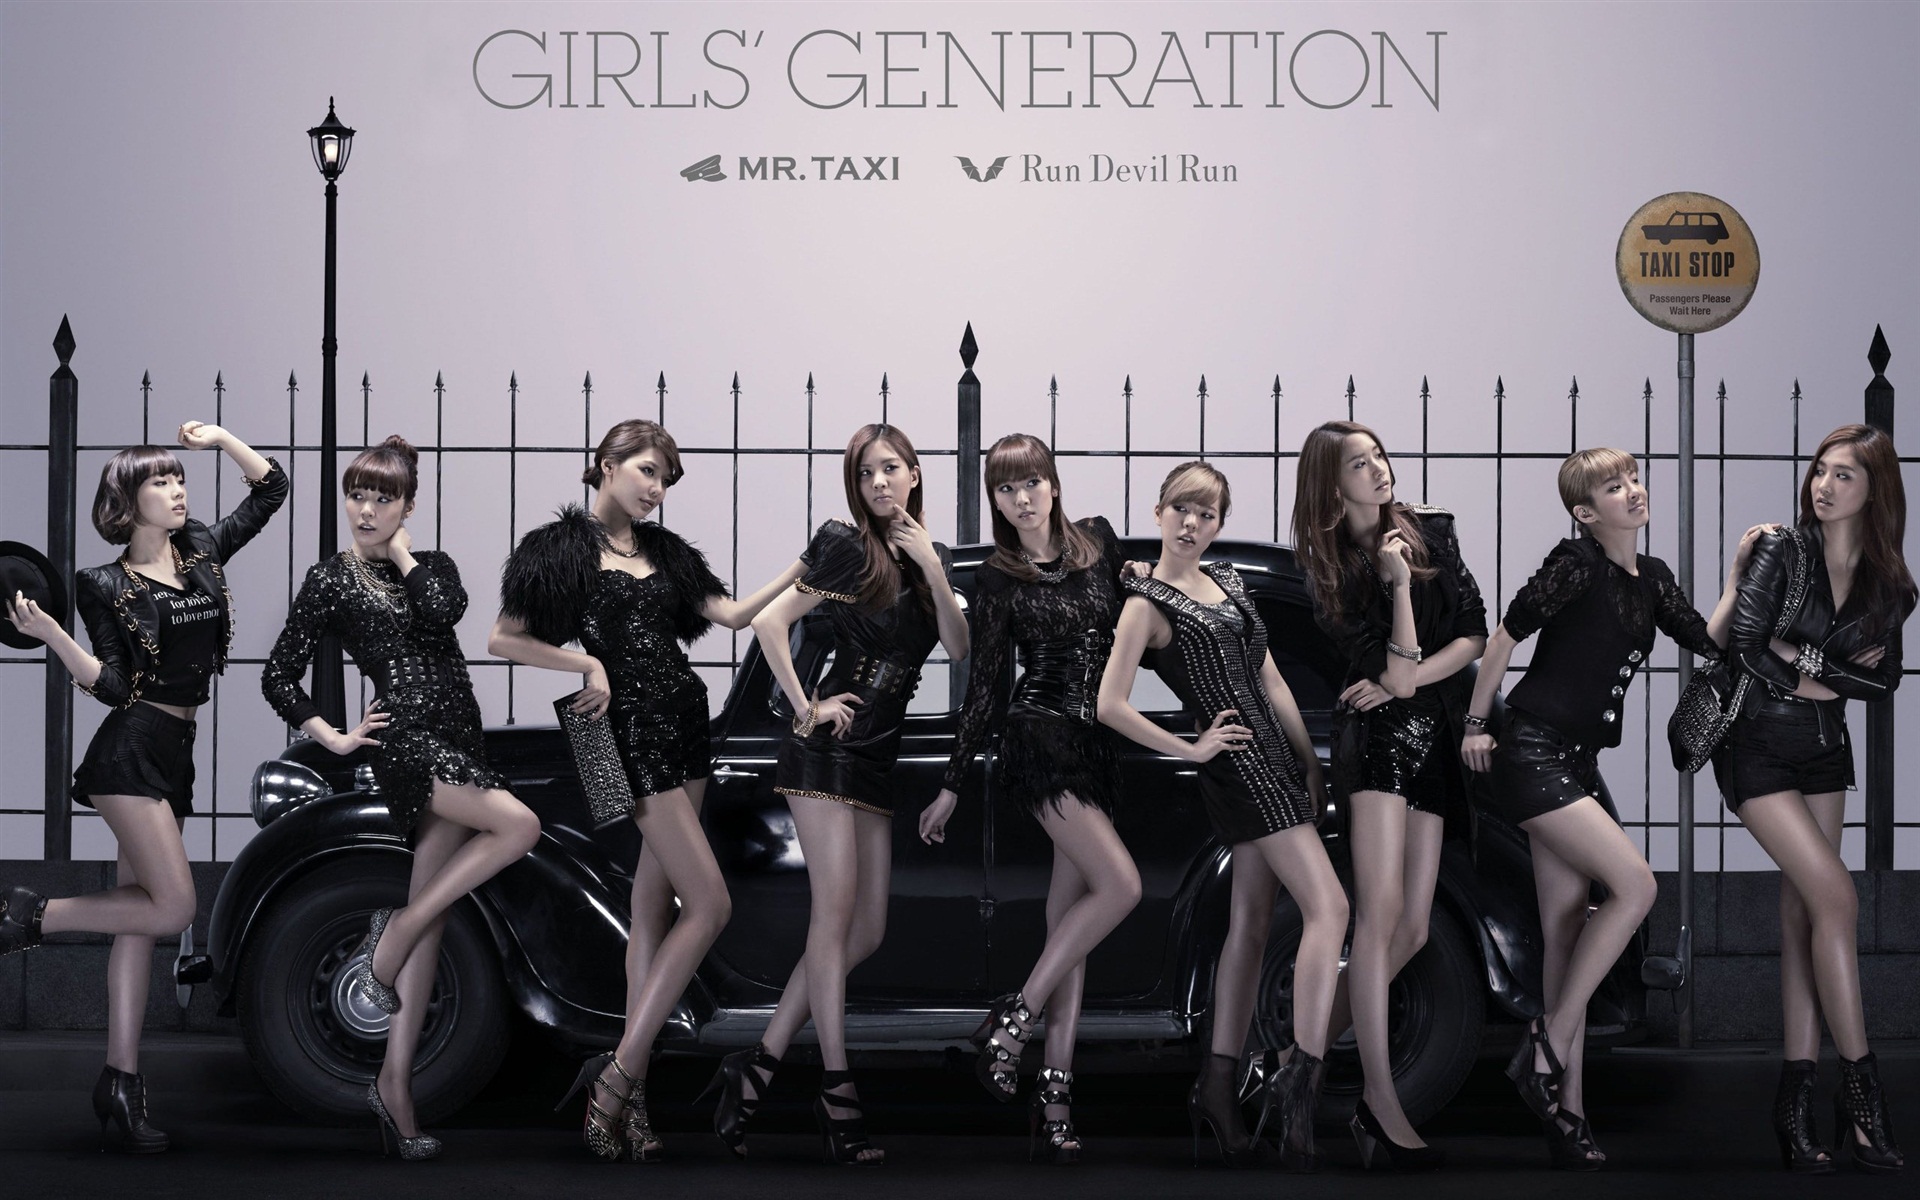 Generation Girls HD wallpapers dernière collection #14 - 1920x1200